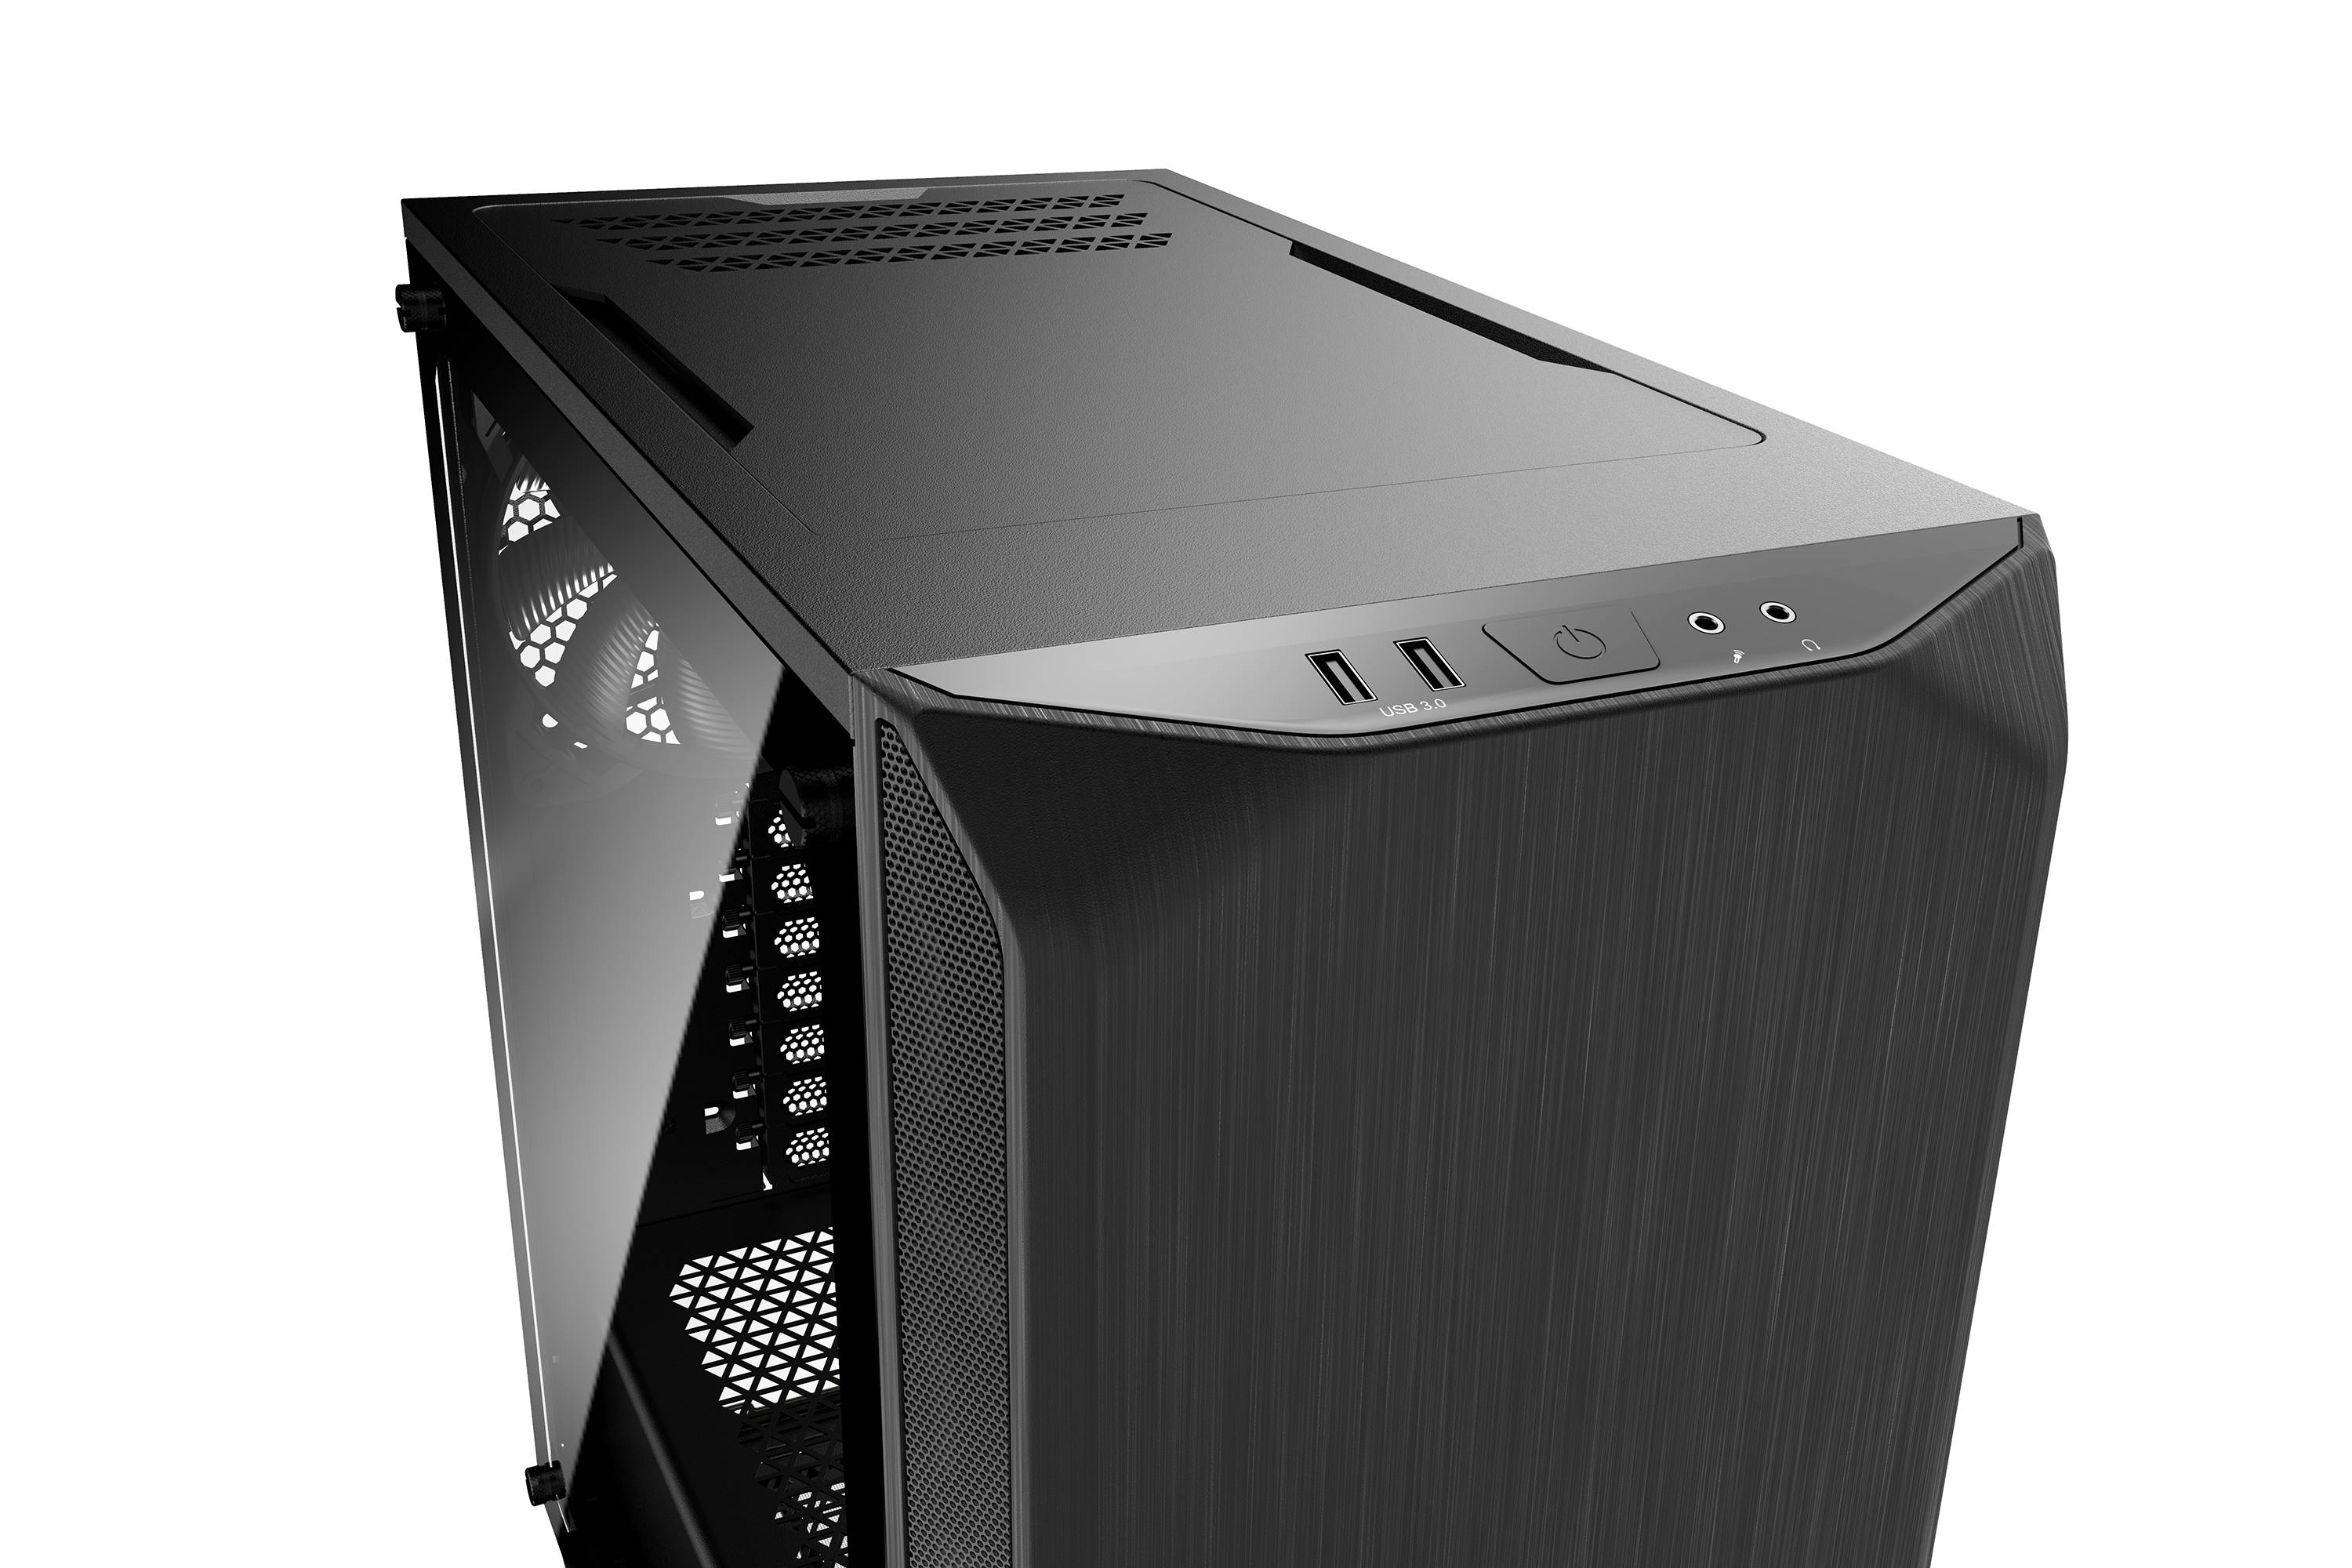 Rca Informatique - image du produit : PURE BASE 500 WINDOW BLACK ATX M-ATX MINI-ITX